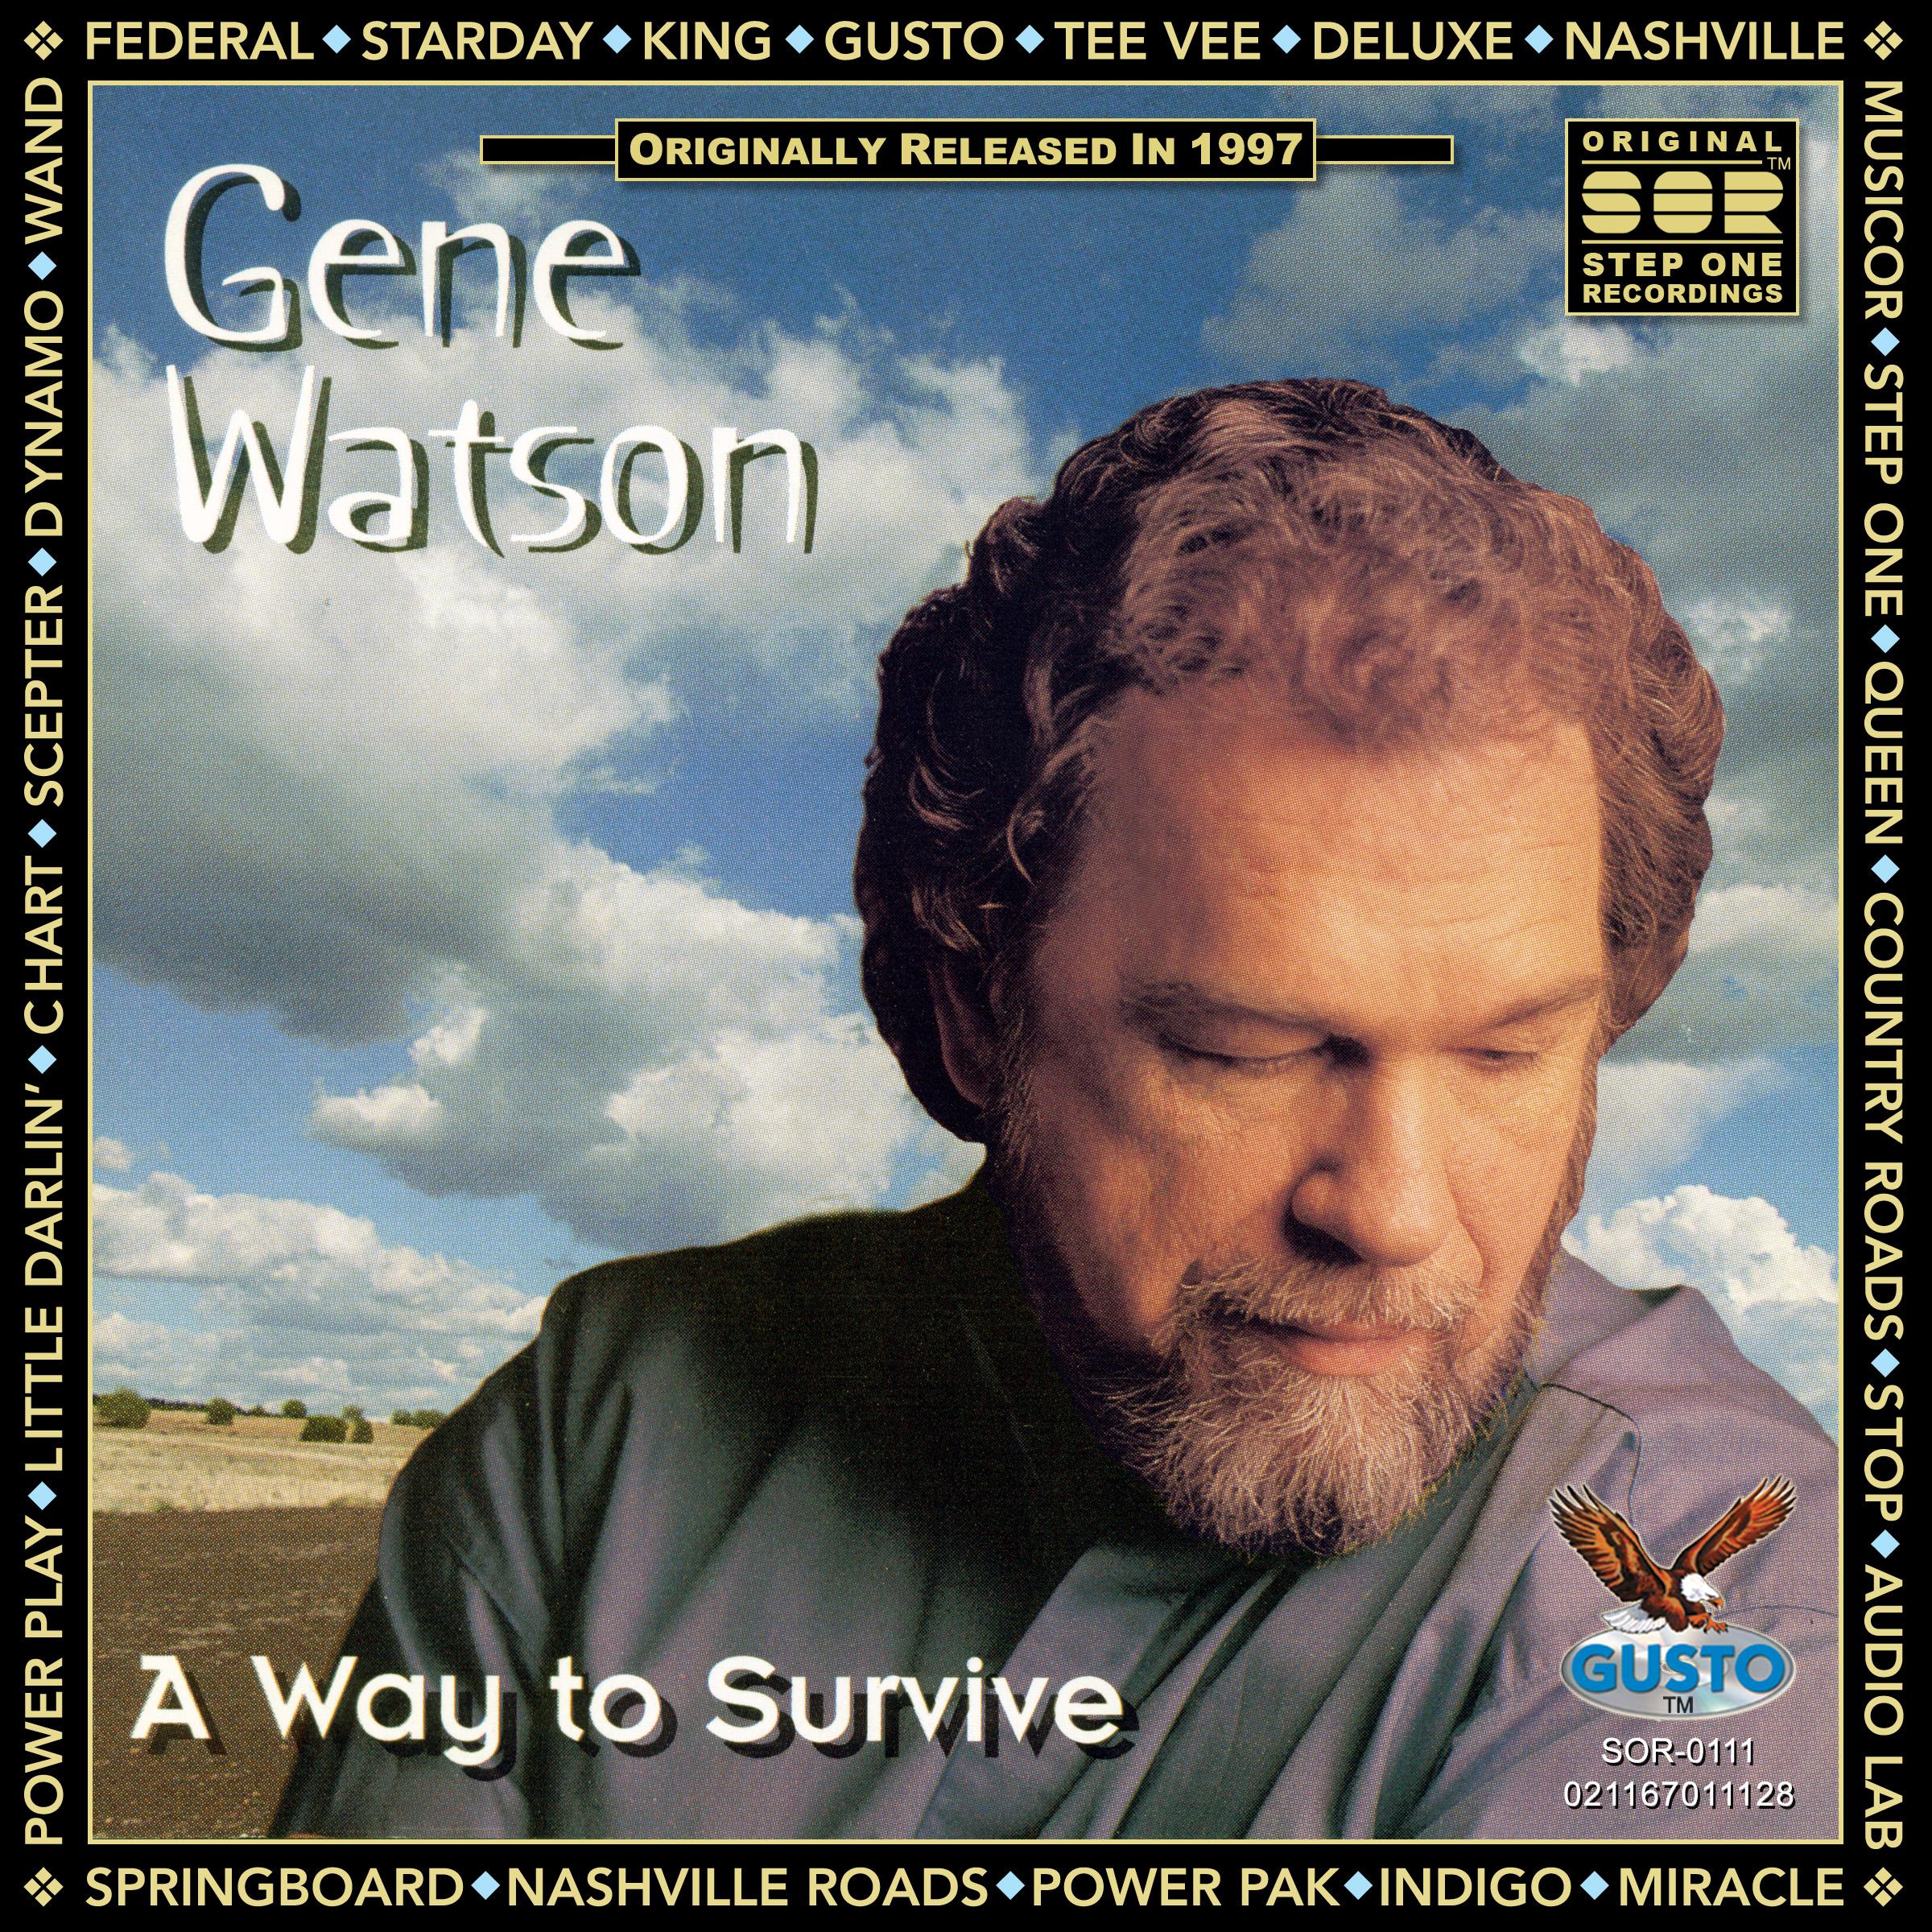 Gene Watson - Old Porch Swing (Original Step One Records Recording)